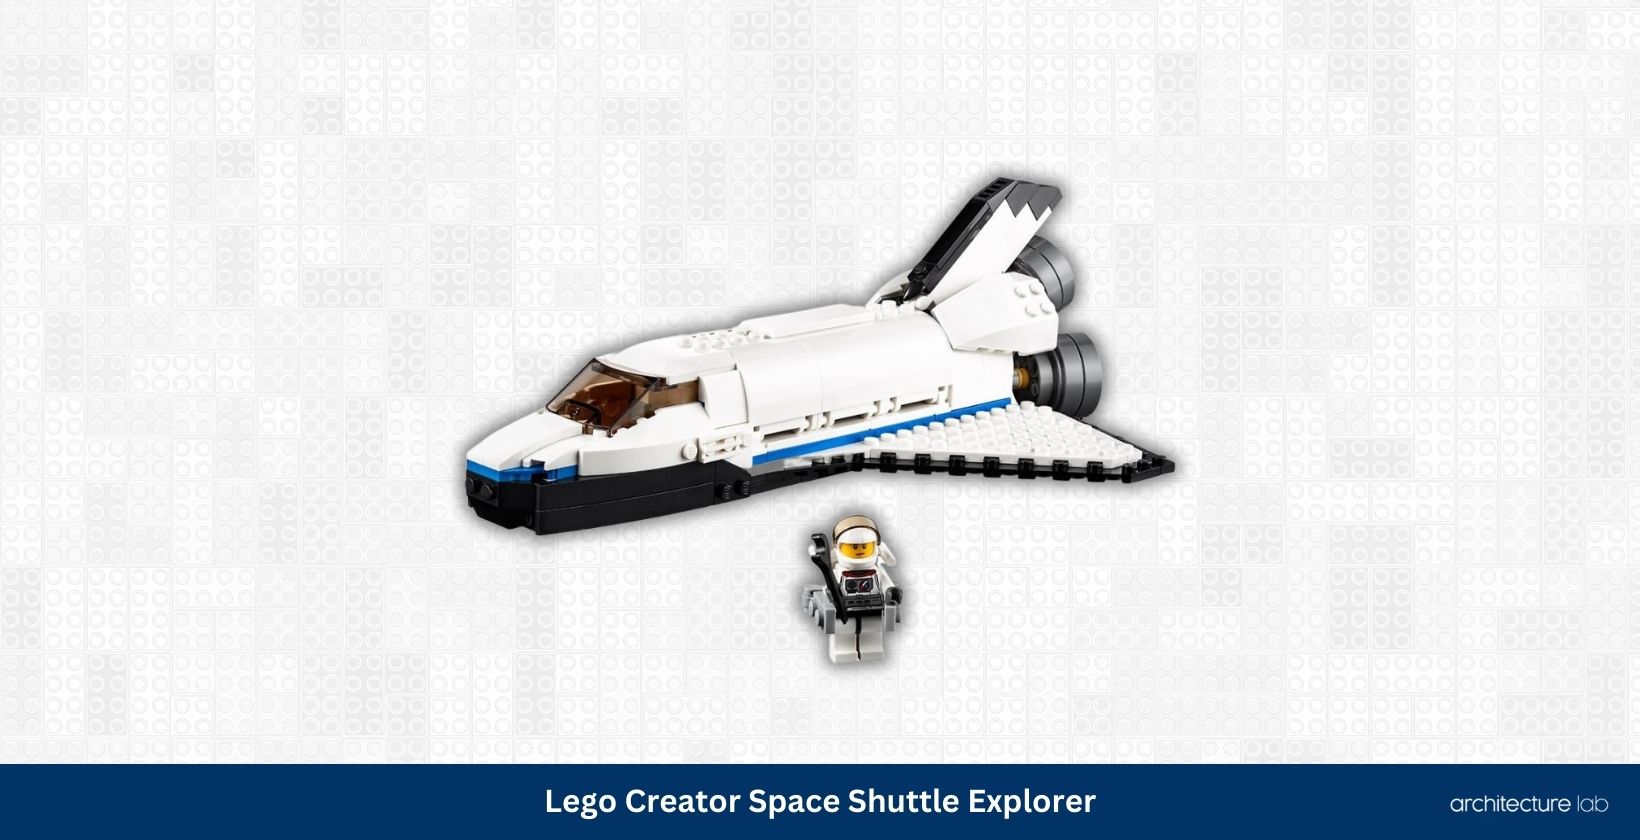 Lego creator space shuttle